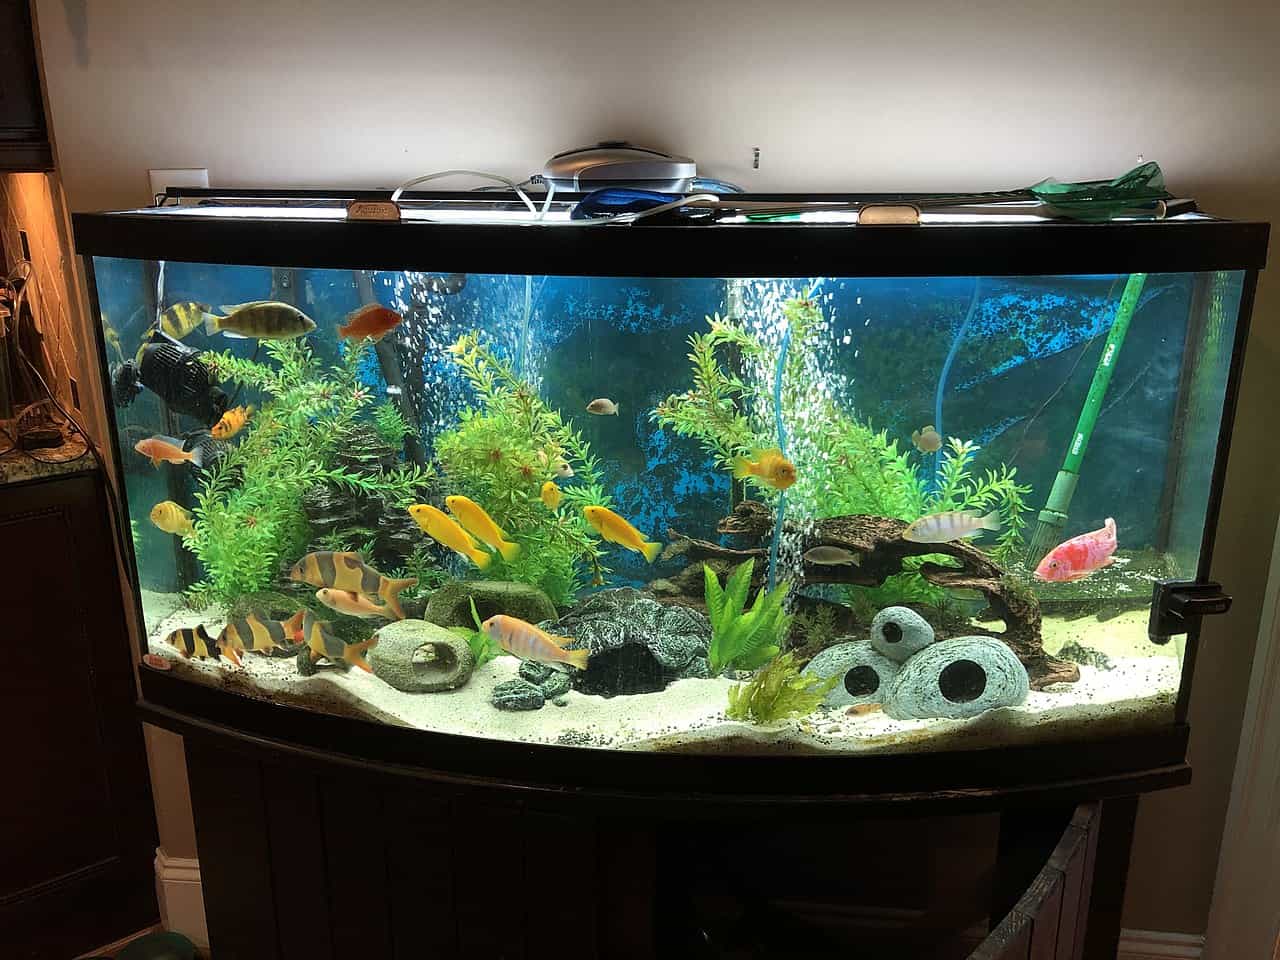 https://cafishvet.com/wp-content/uploads/2020/09/fish-tank-water-quality.jpg